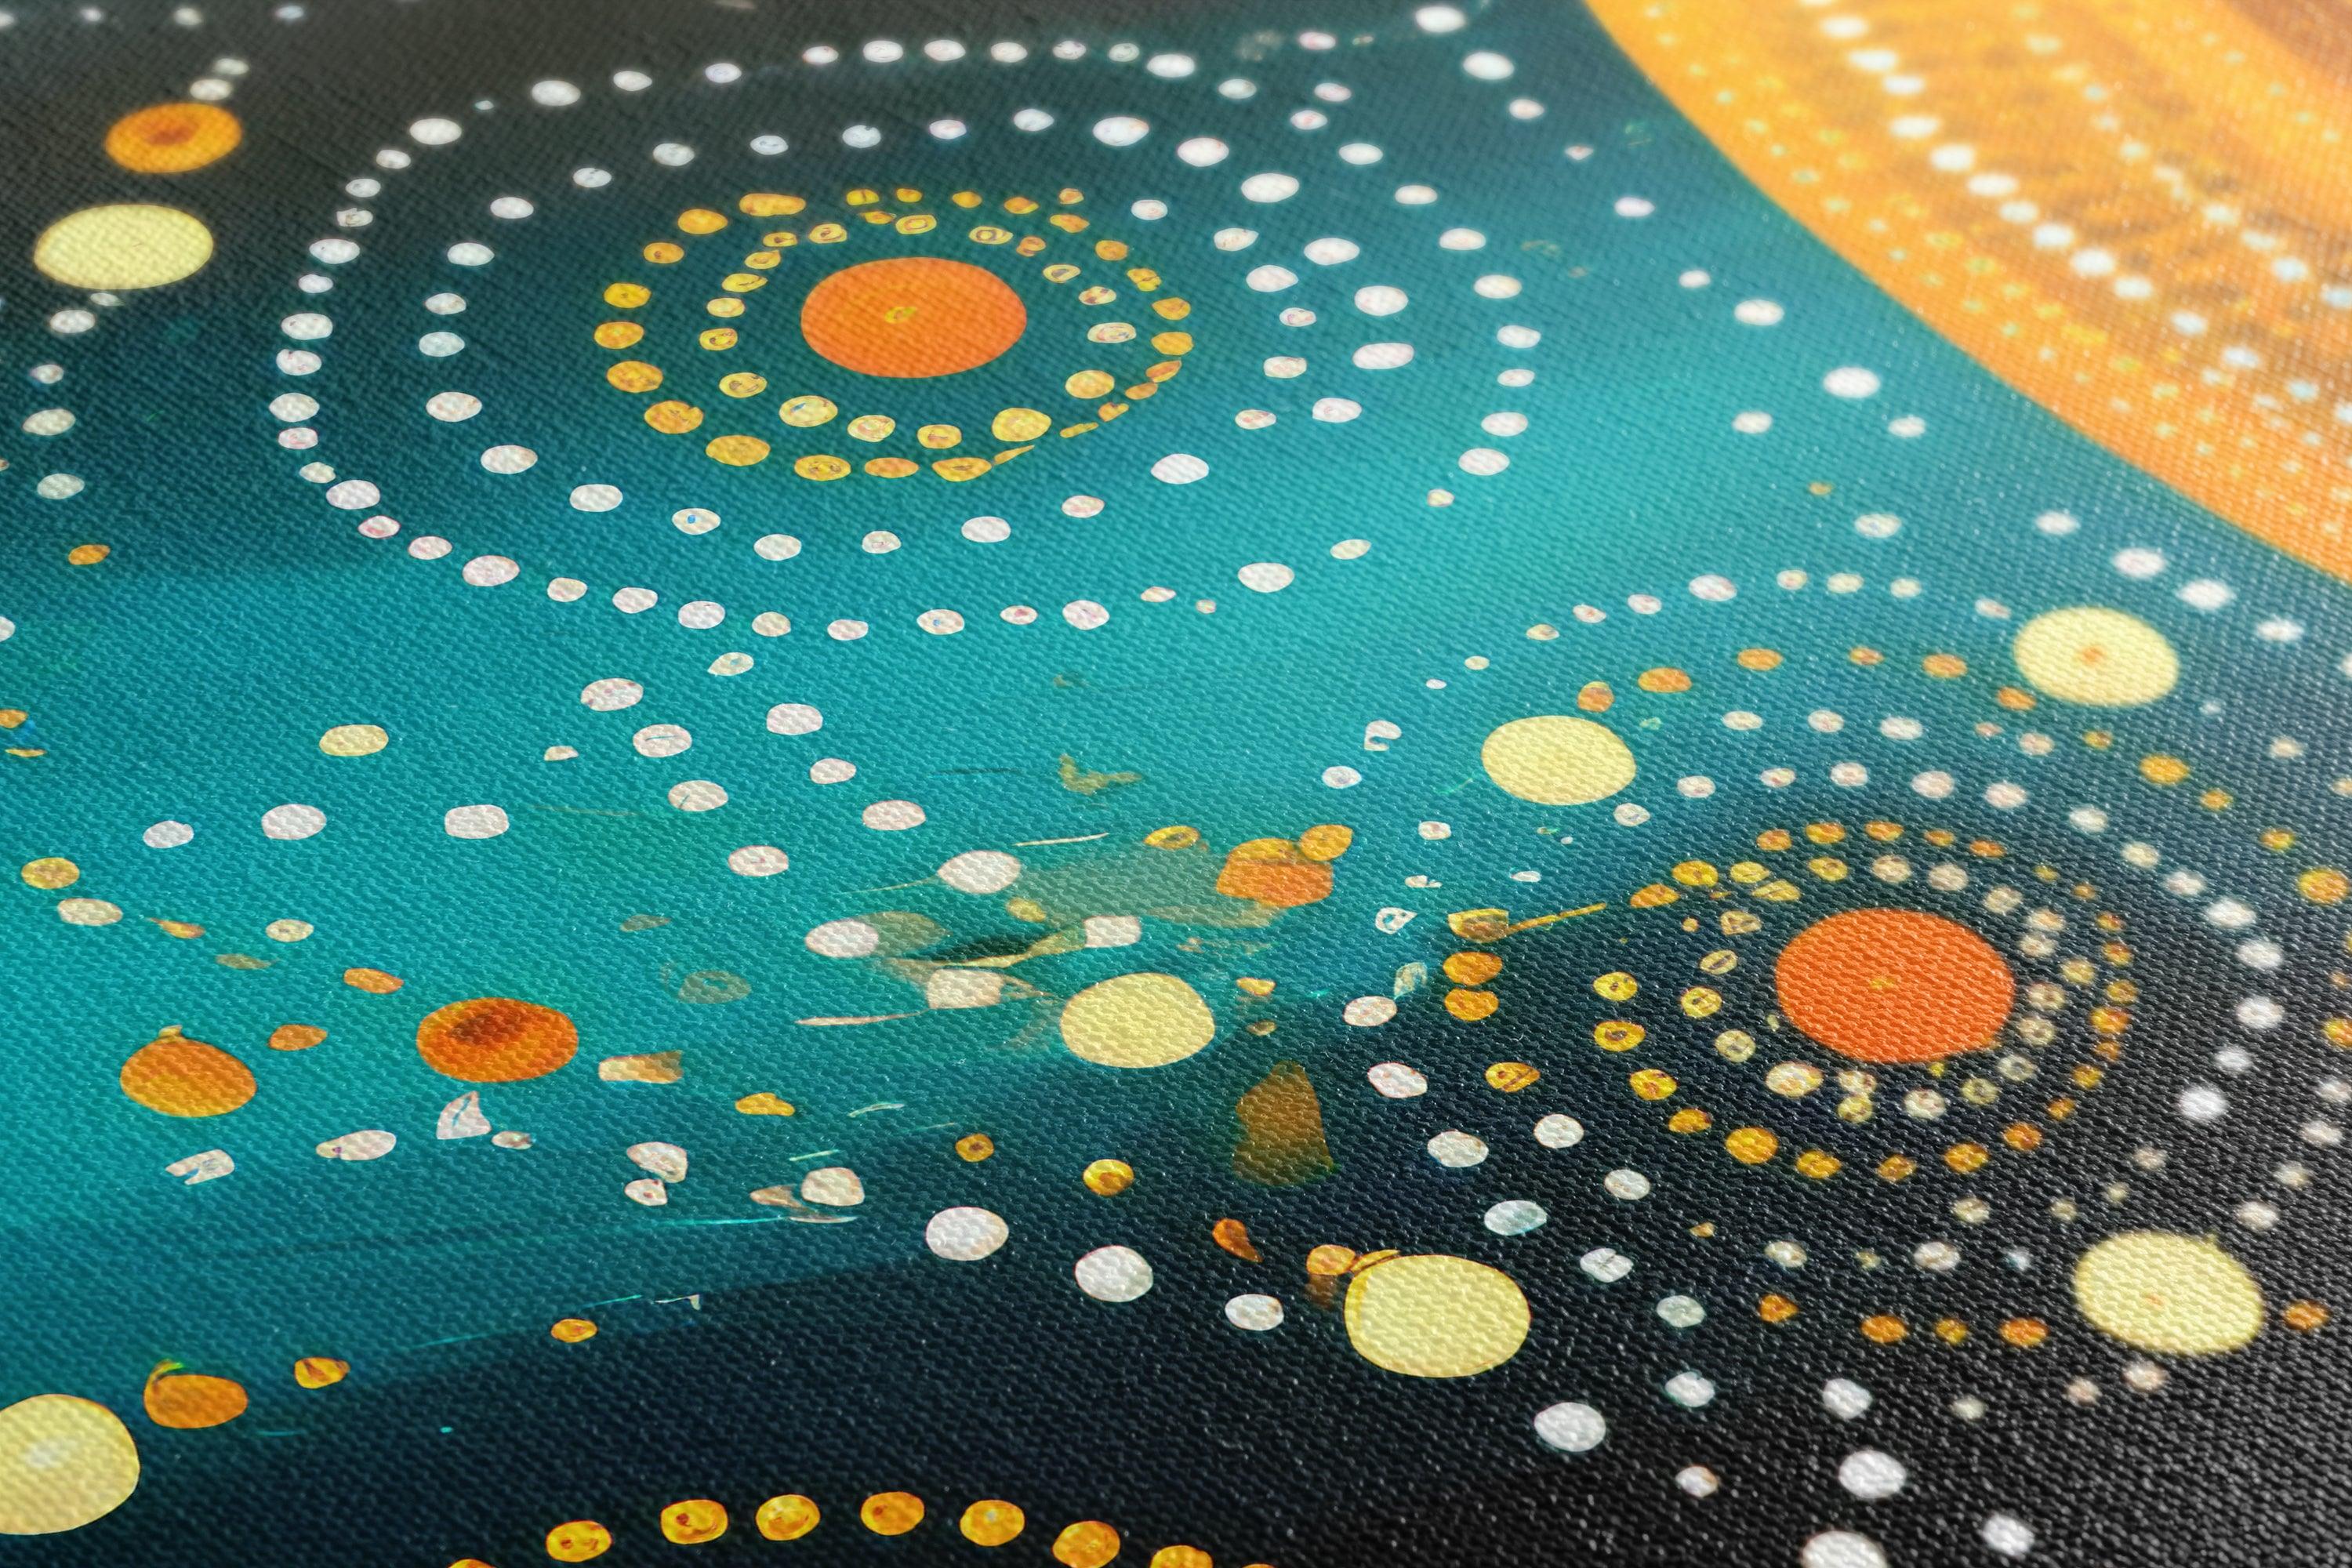 Dark Teal and Gold Dot Art Cosmic Landscape - Canvas Print - Artoholica Ready to Hang Canvas Print